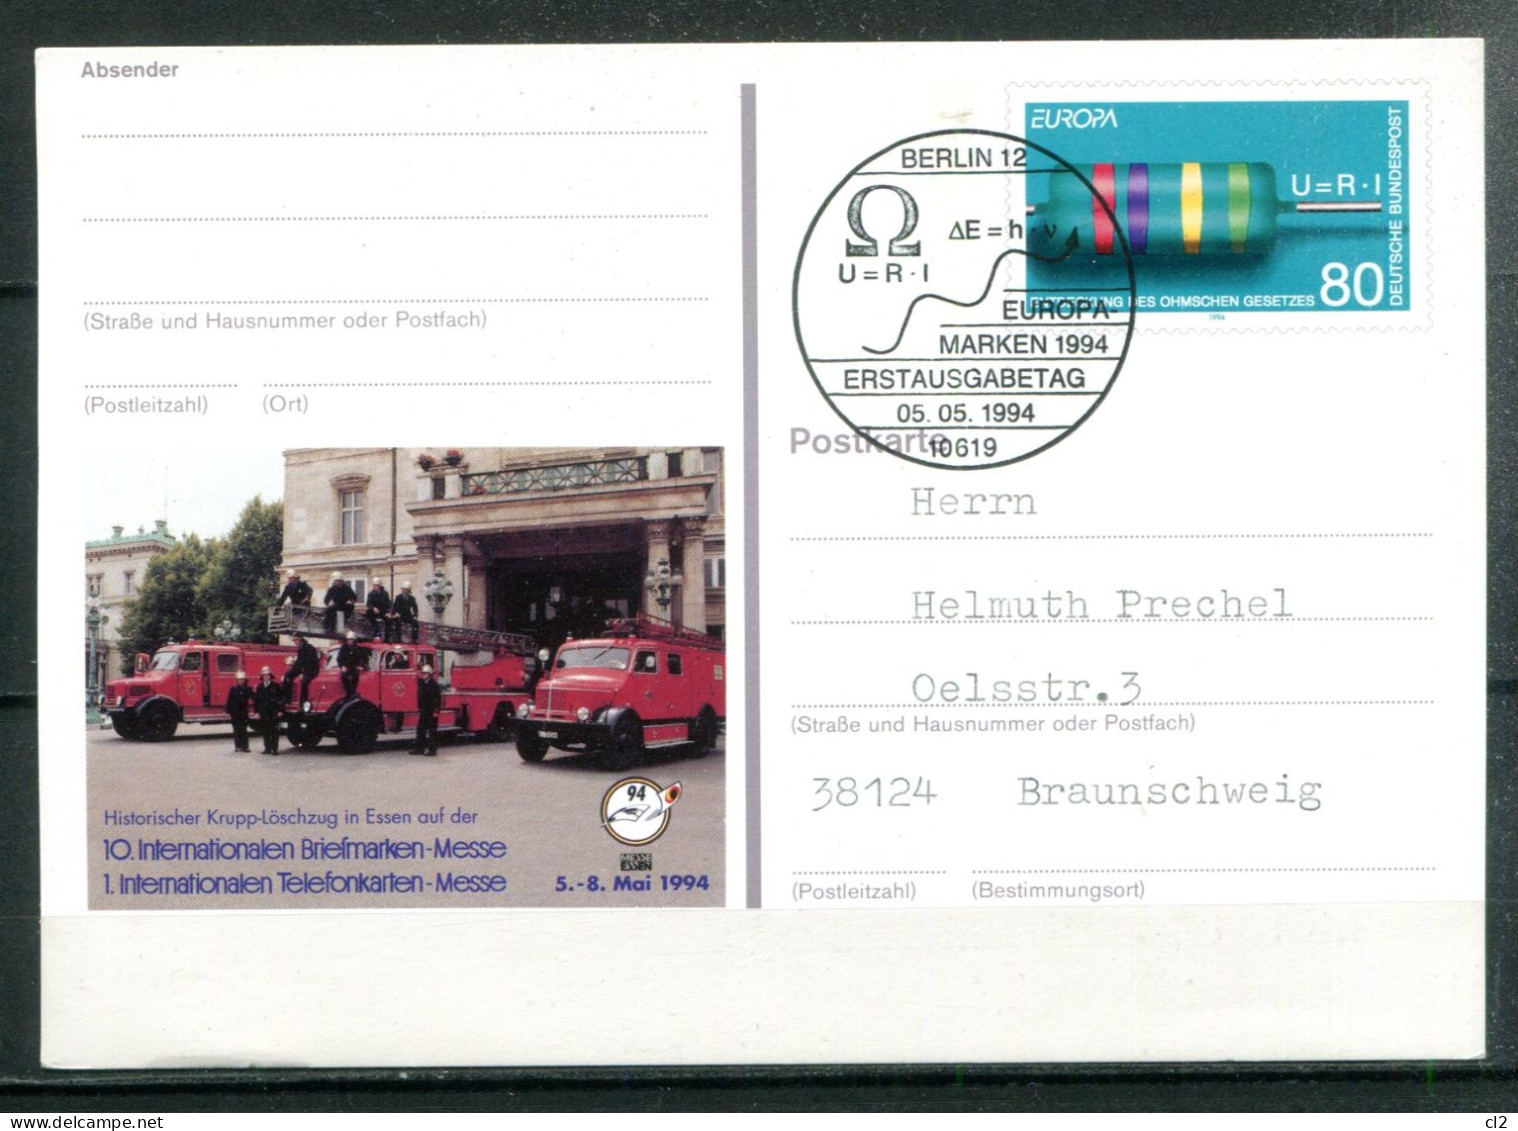 REPUBLIQUE FEDERALE ALLEMANDE - Ganzsache (Entier Postal) Michel PSo 33 (Europa Marken Erstausgabetag) - Illustrated Postcards - Used